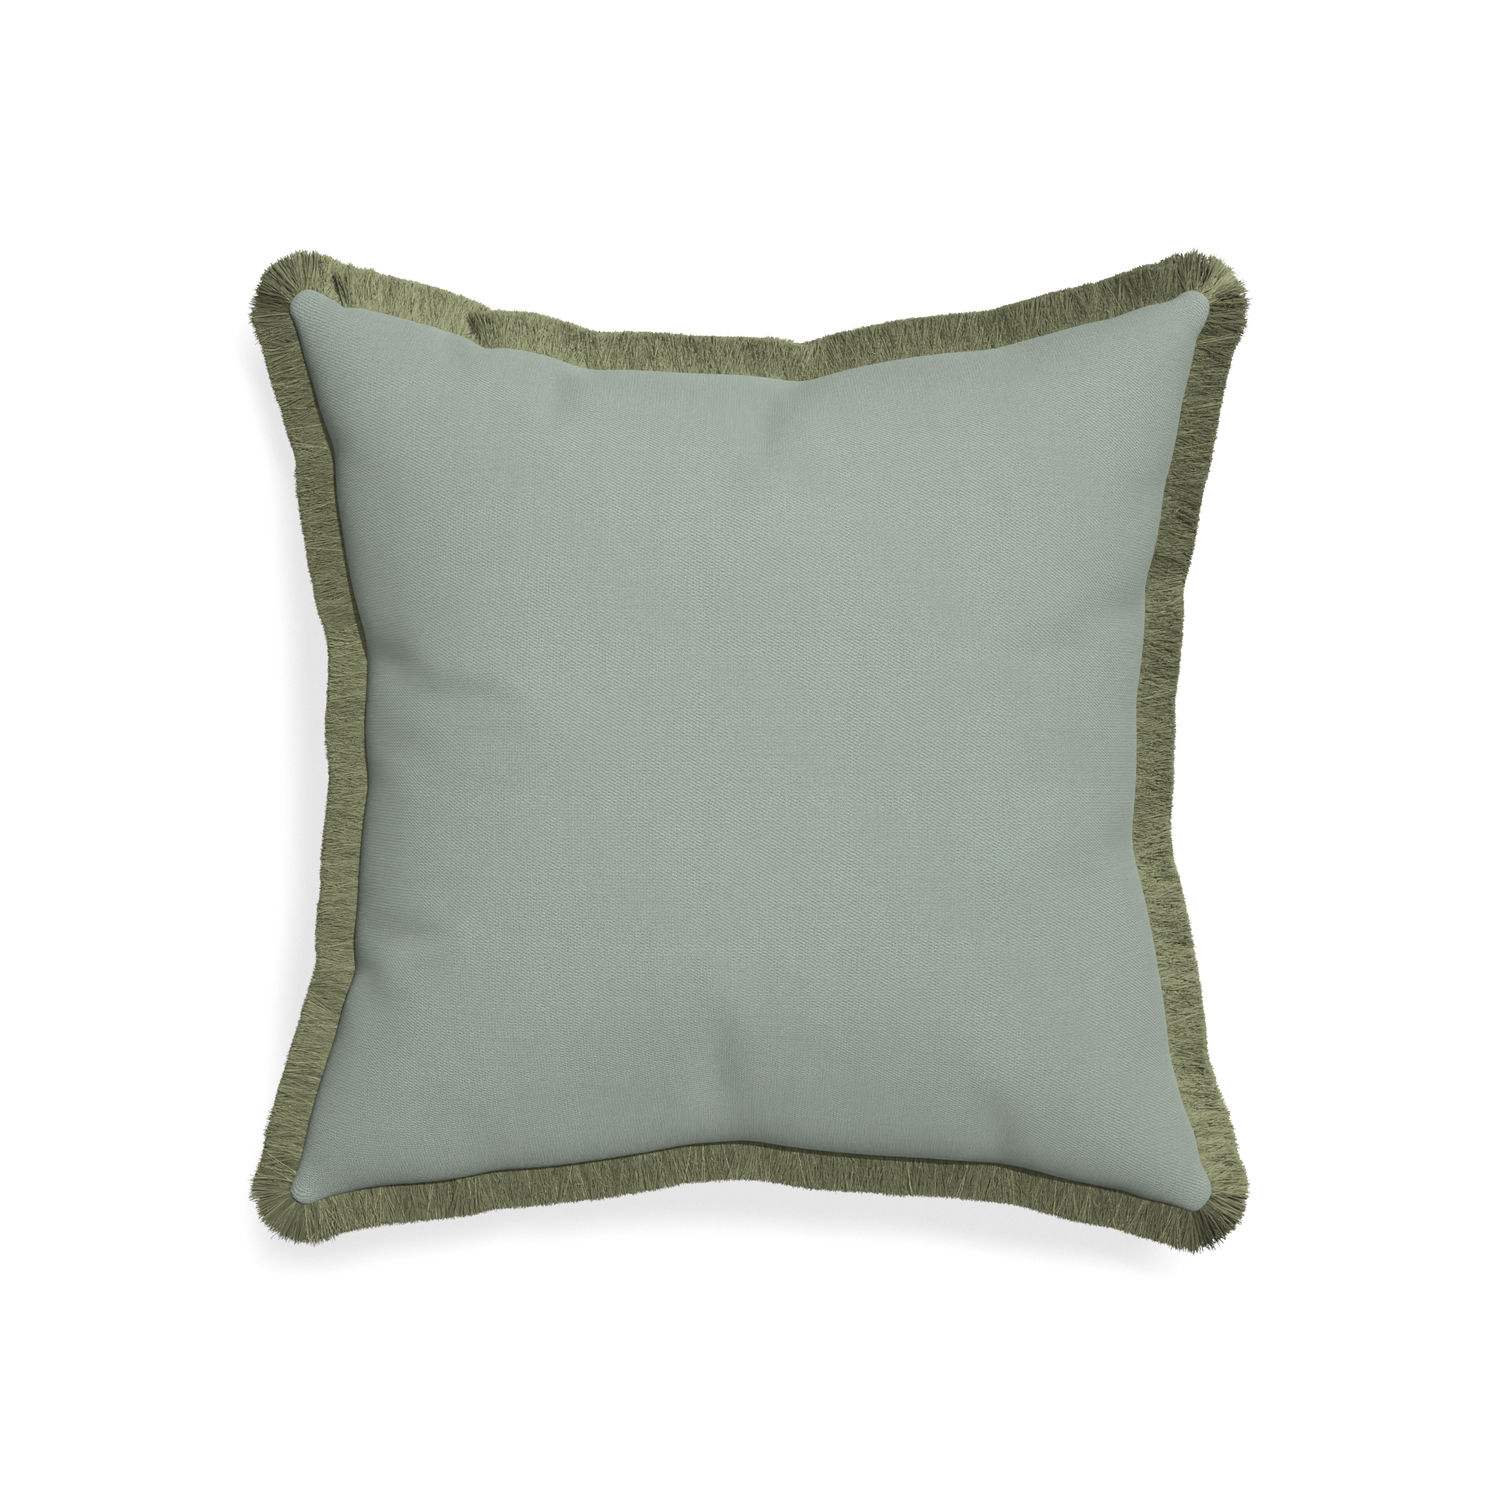 20-square sage custom pillow with sage fringe on white background